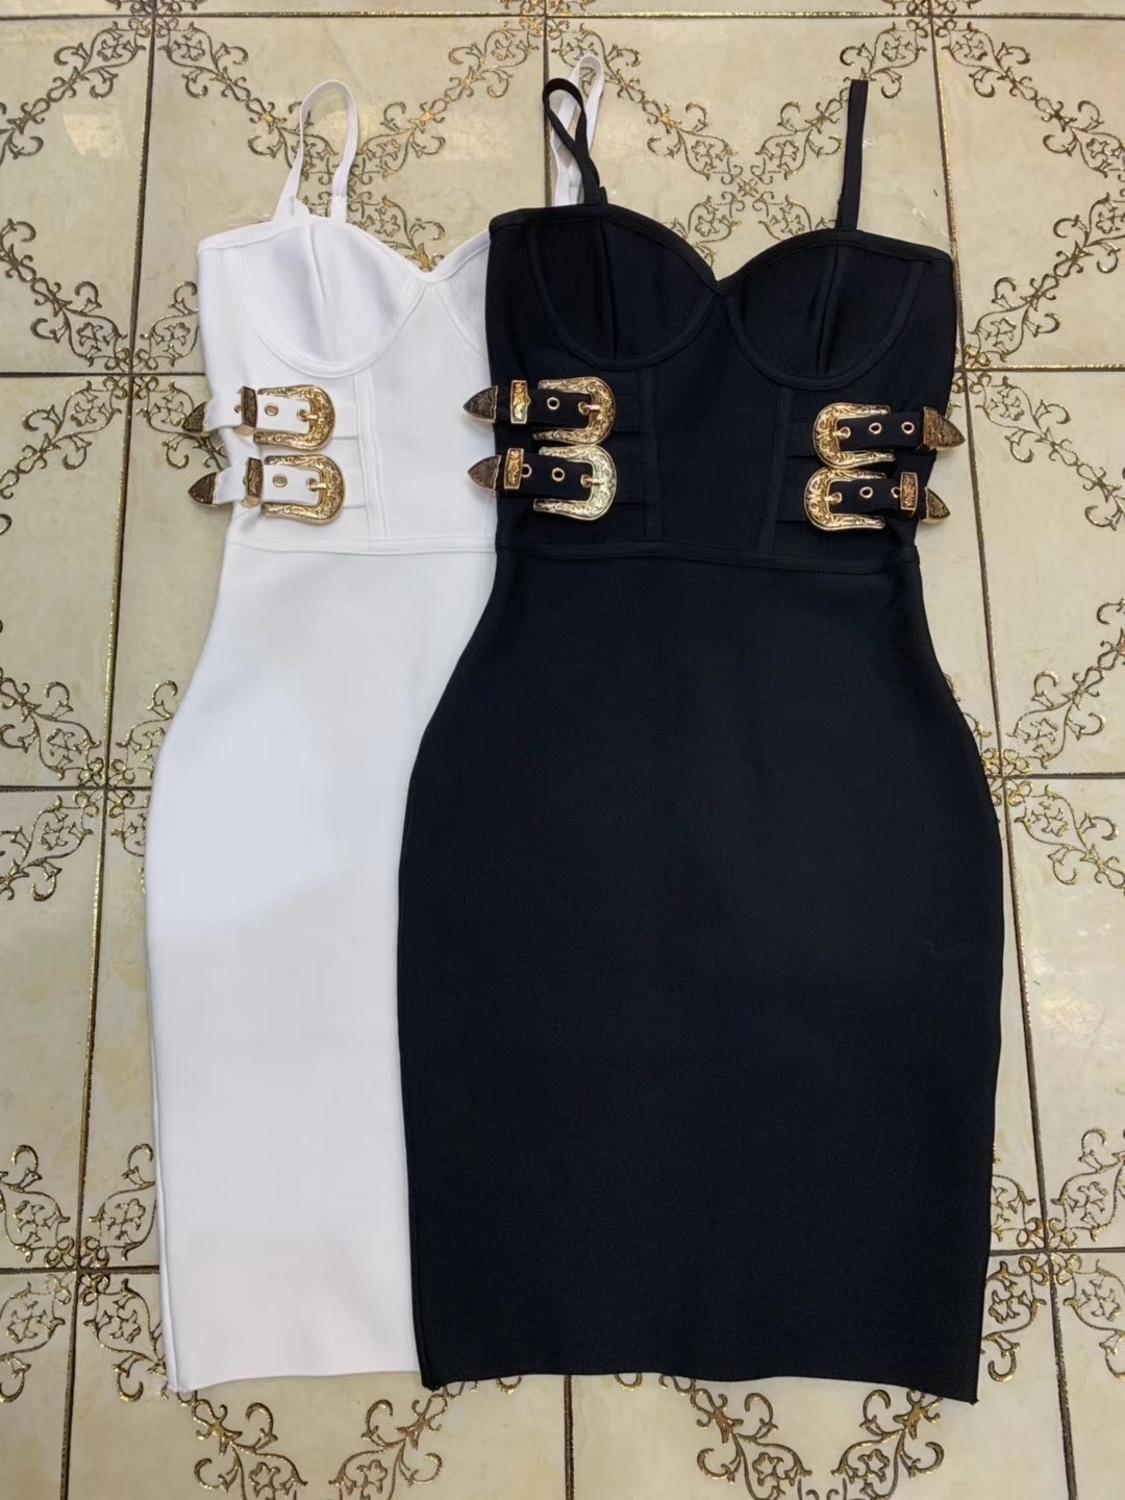 Women Summer Dress Sexy V Neck Backless Black White Bodycon Bandage Dress 2020 Designer Fashion Evening Party Dress Vestido